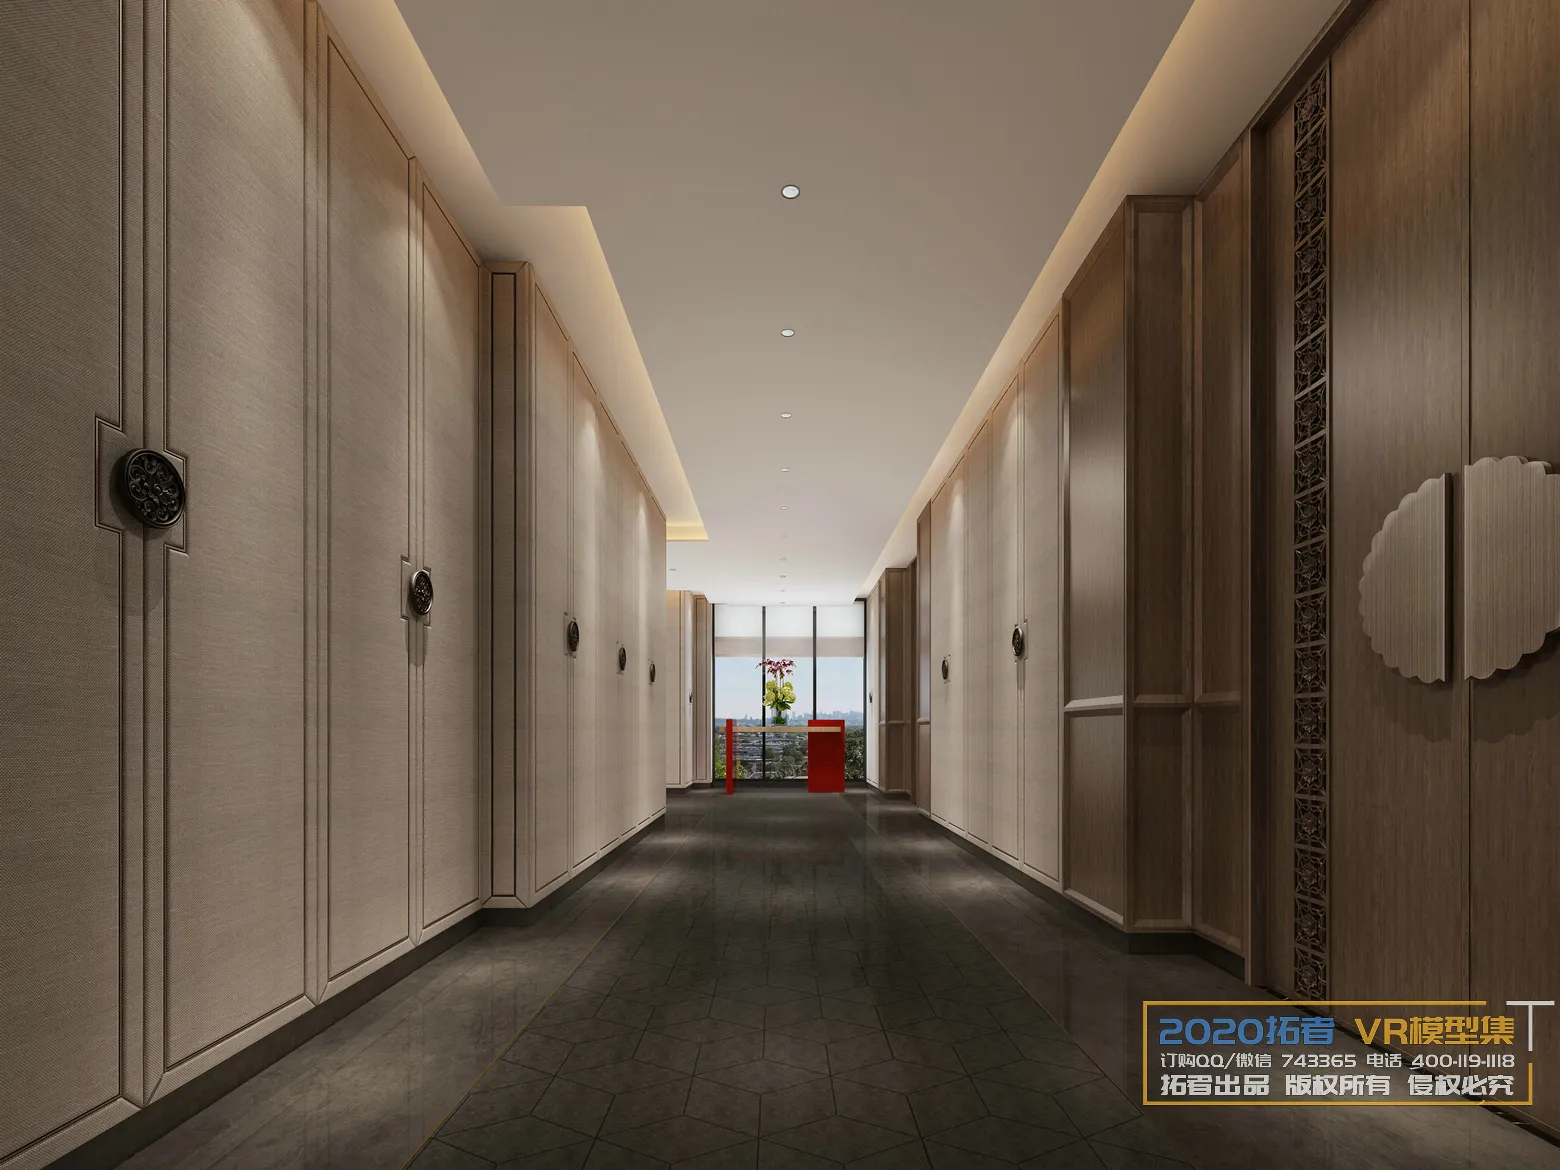 Extension Interior 20 – 12 – ELEVATOR & CORRIDOR – 48